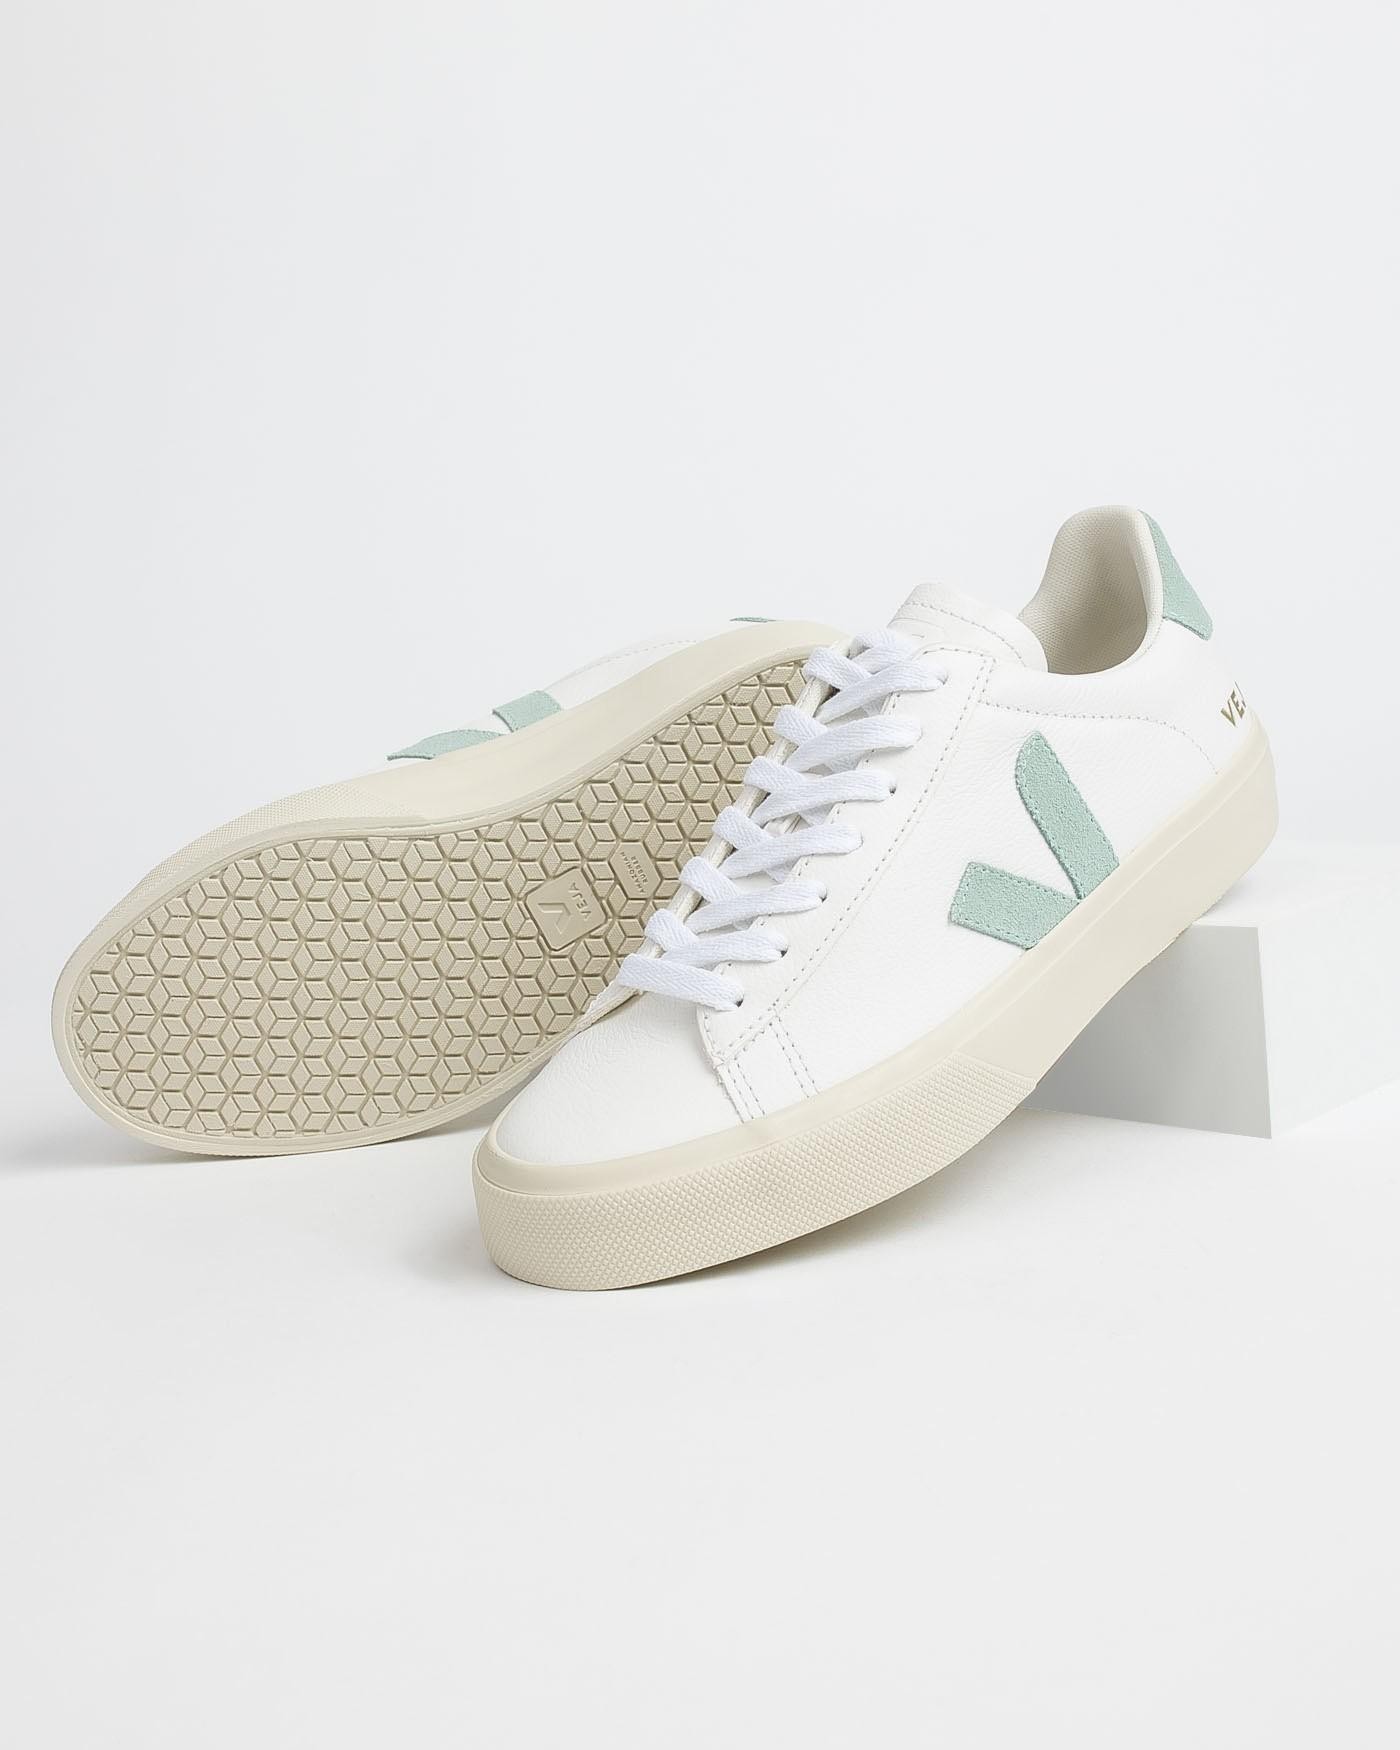 veja-zapatillas-chromefree-white-matcha-sneaker-white-blanca 6